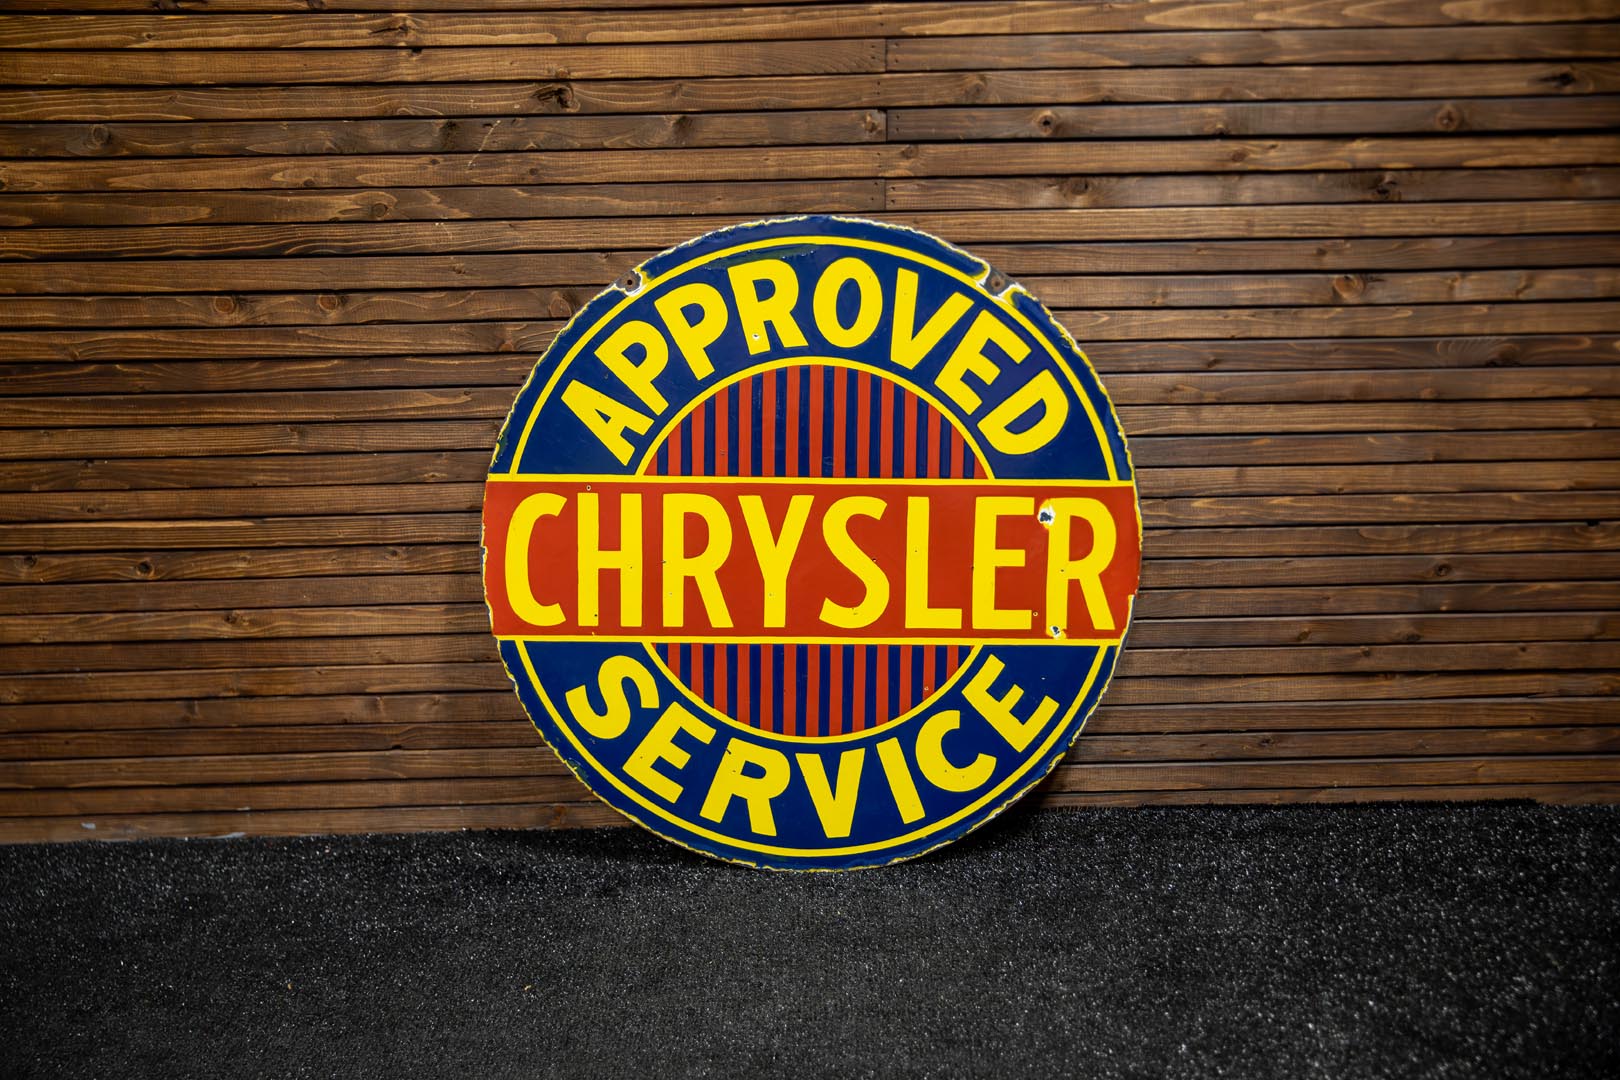  Chrysler Approved Service Doub le-Sided Porcelain Sign 